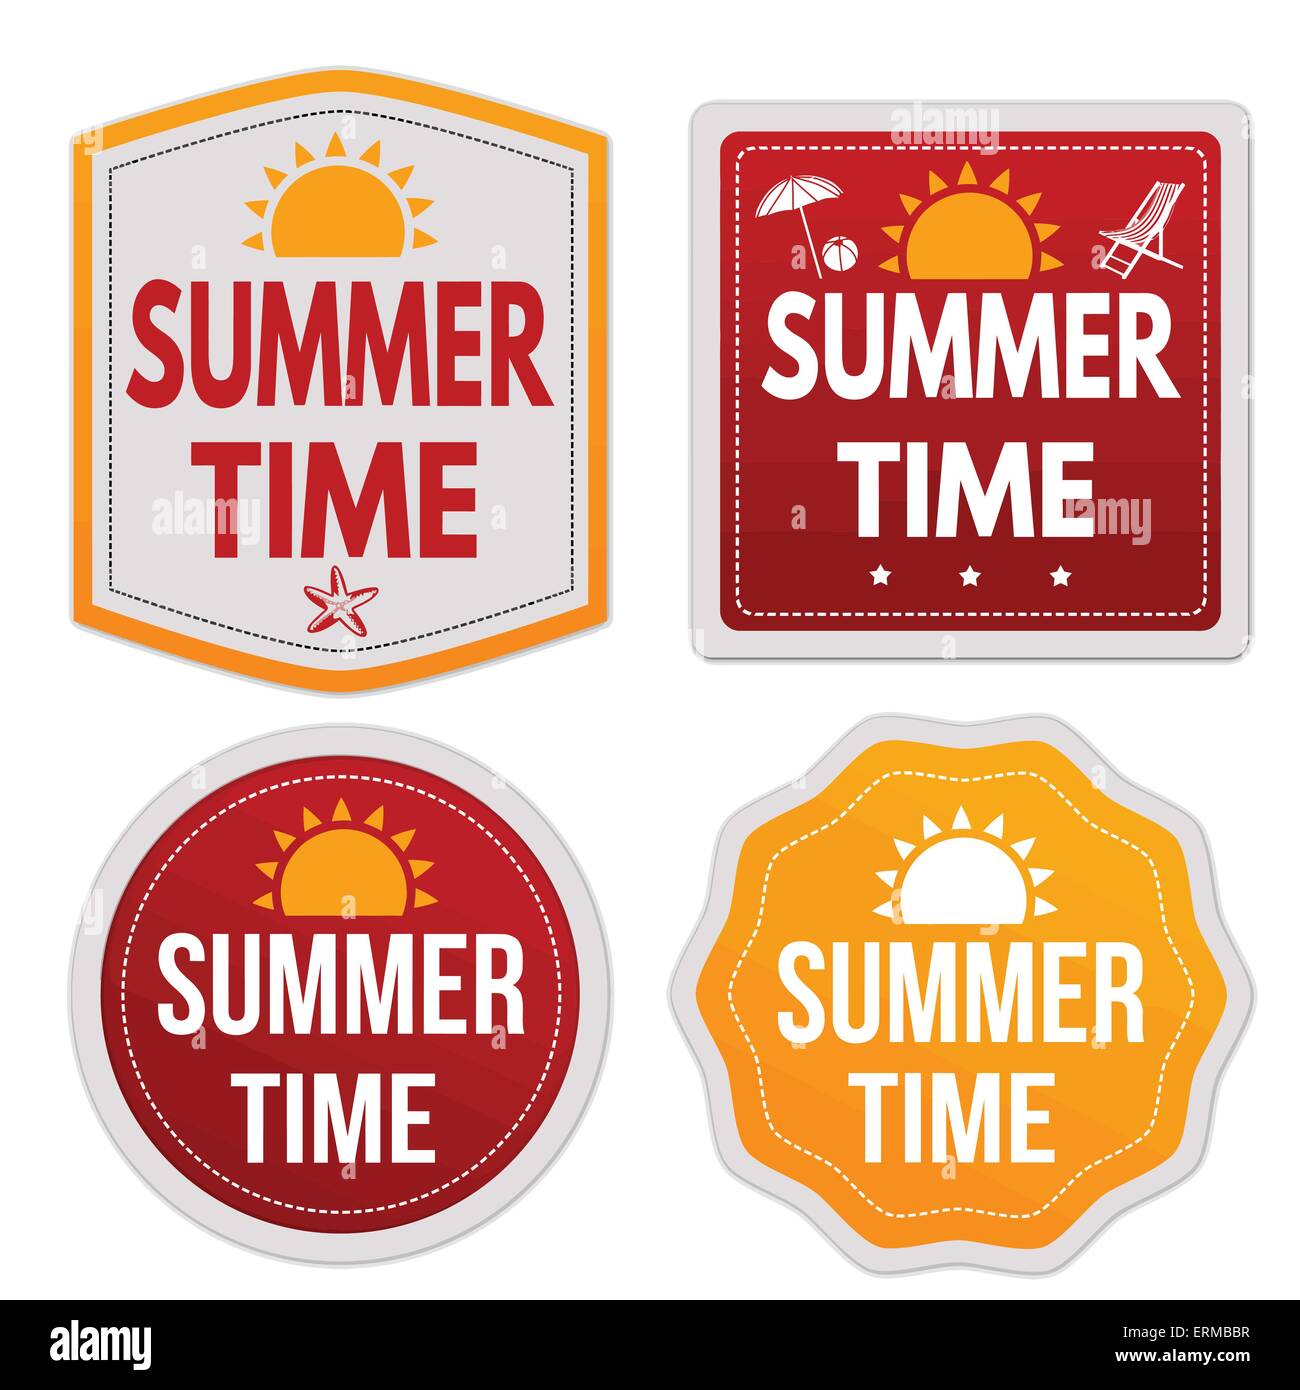 Summer time set di adesivi su sfondo bianco, illustrazione vettoriale Illustrazione Vettoriale